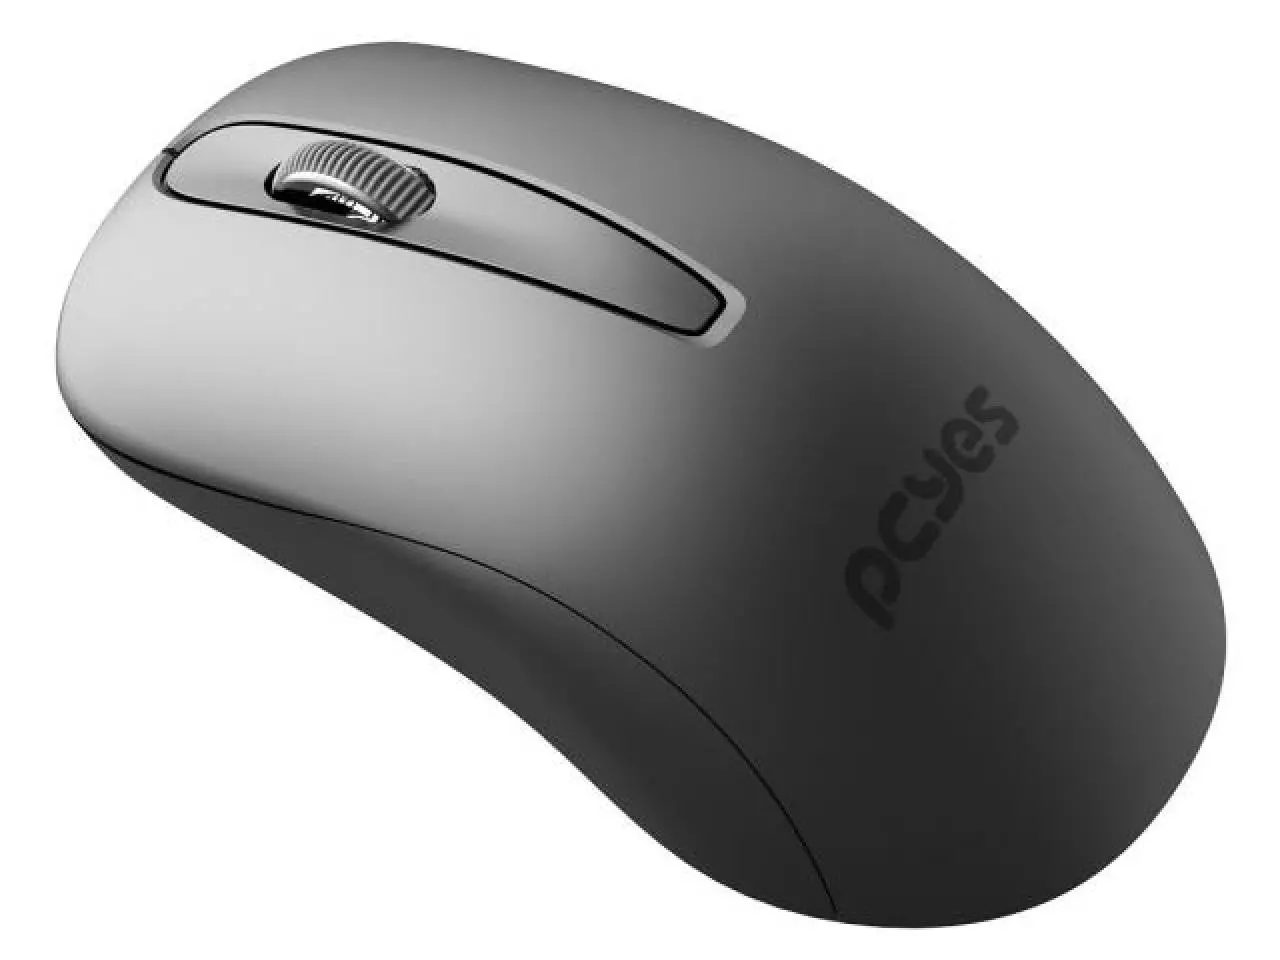 Kit Teclado e Mouse PCYES Comfort PCOCWAB Wireless — HARDSTORE